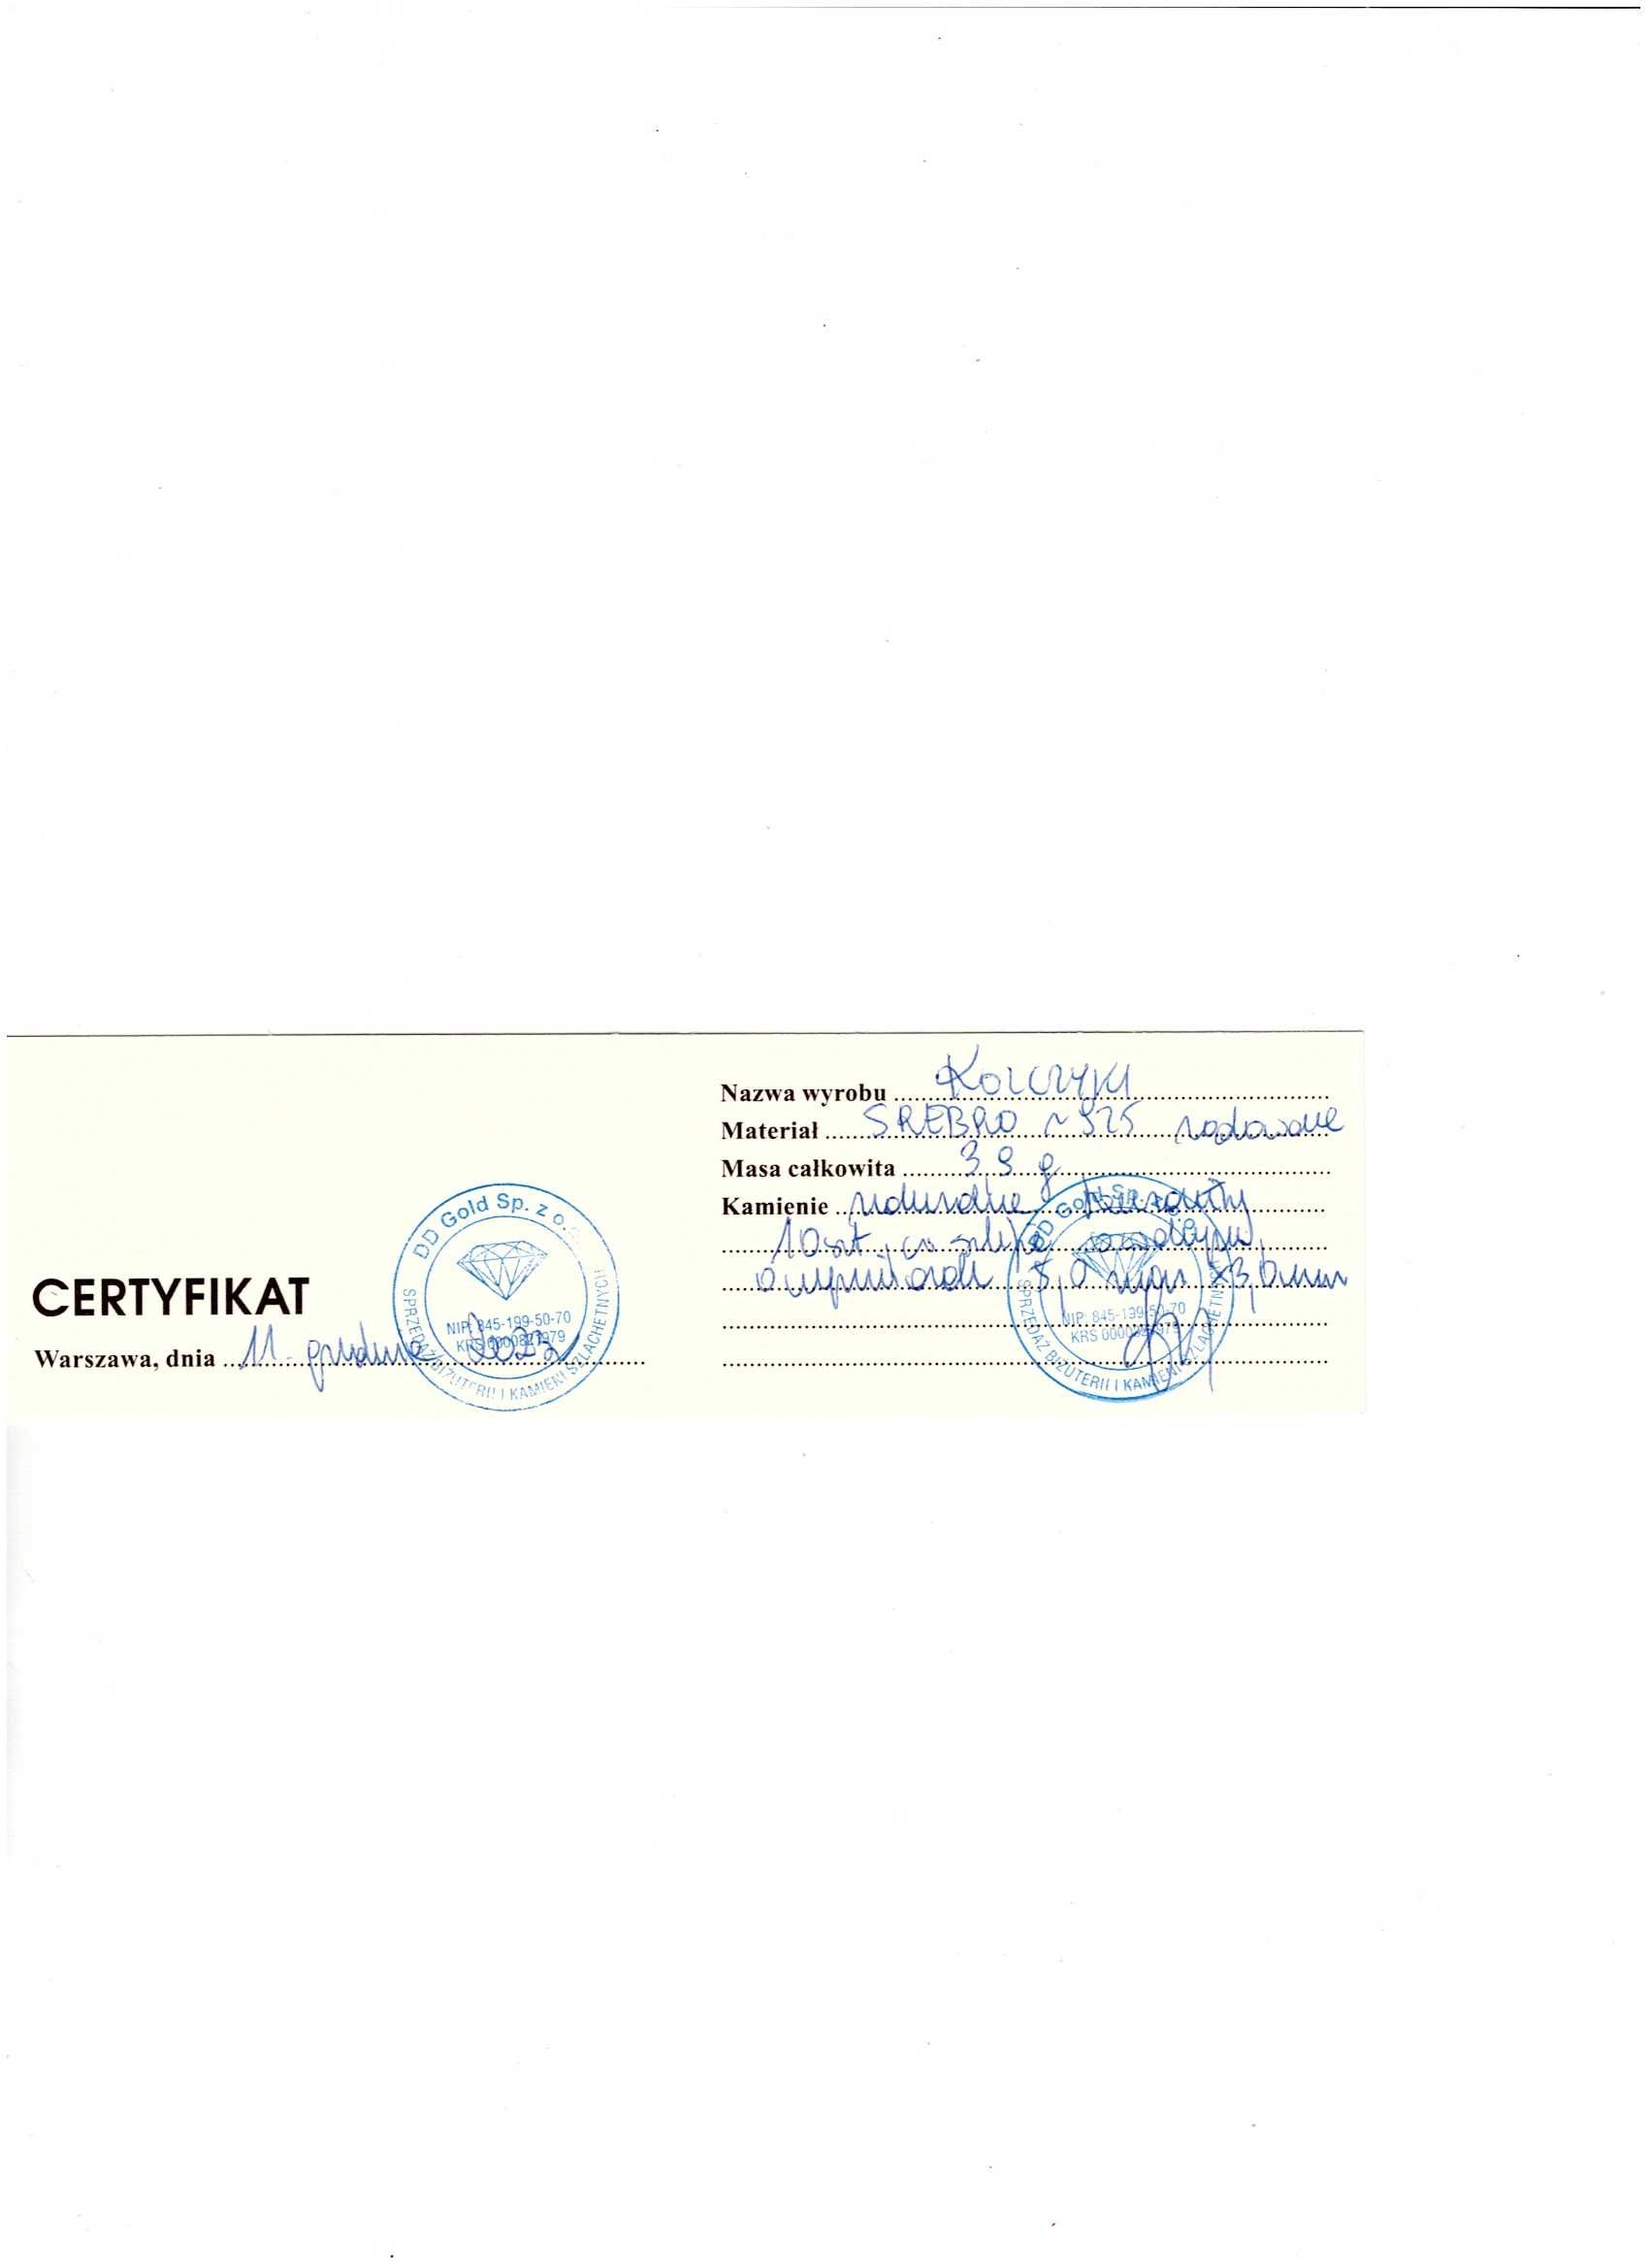 kolczyki srebro 925 tanzanity 3,9 g certyfikat